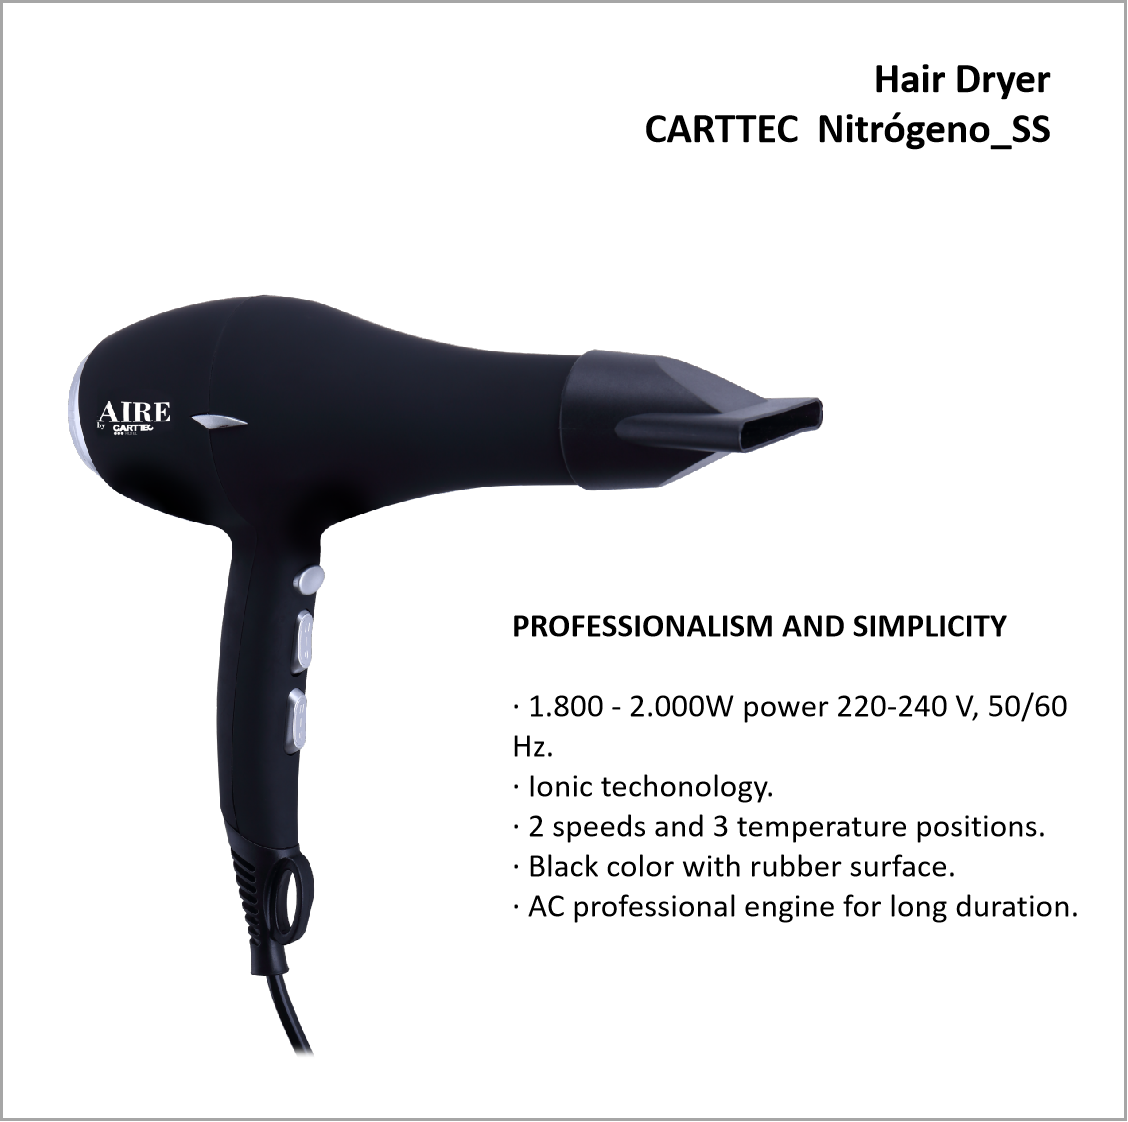 Debaf - CARTTEC  Nitrógeno_SS Hair Dryer